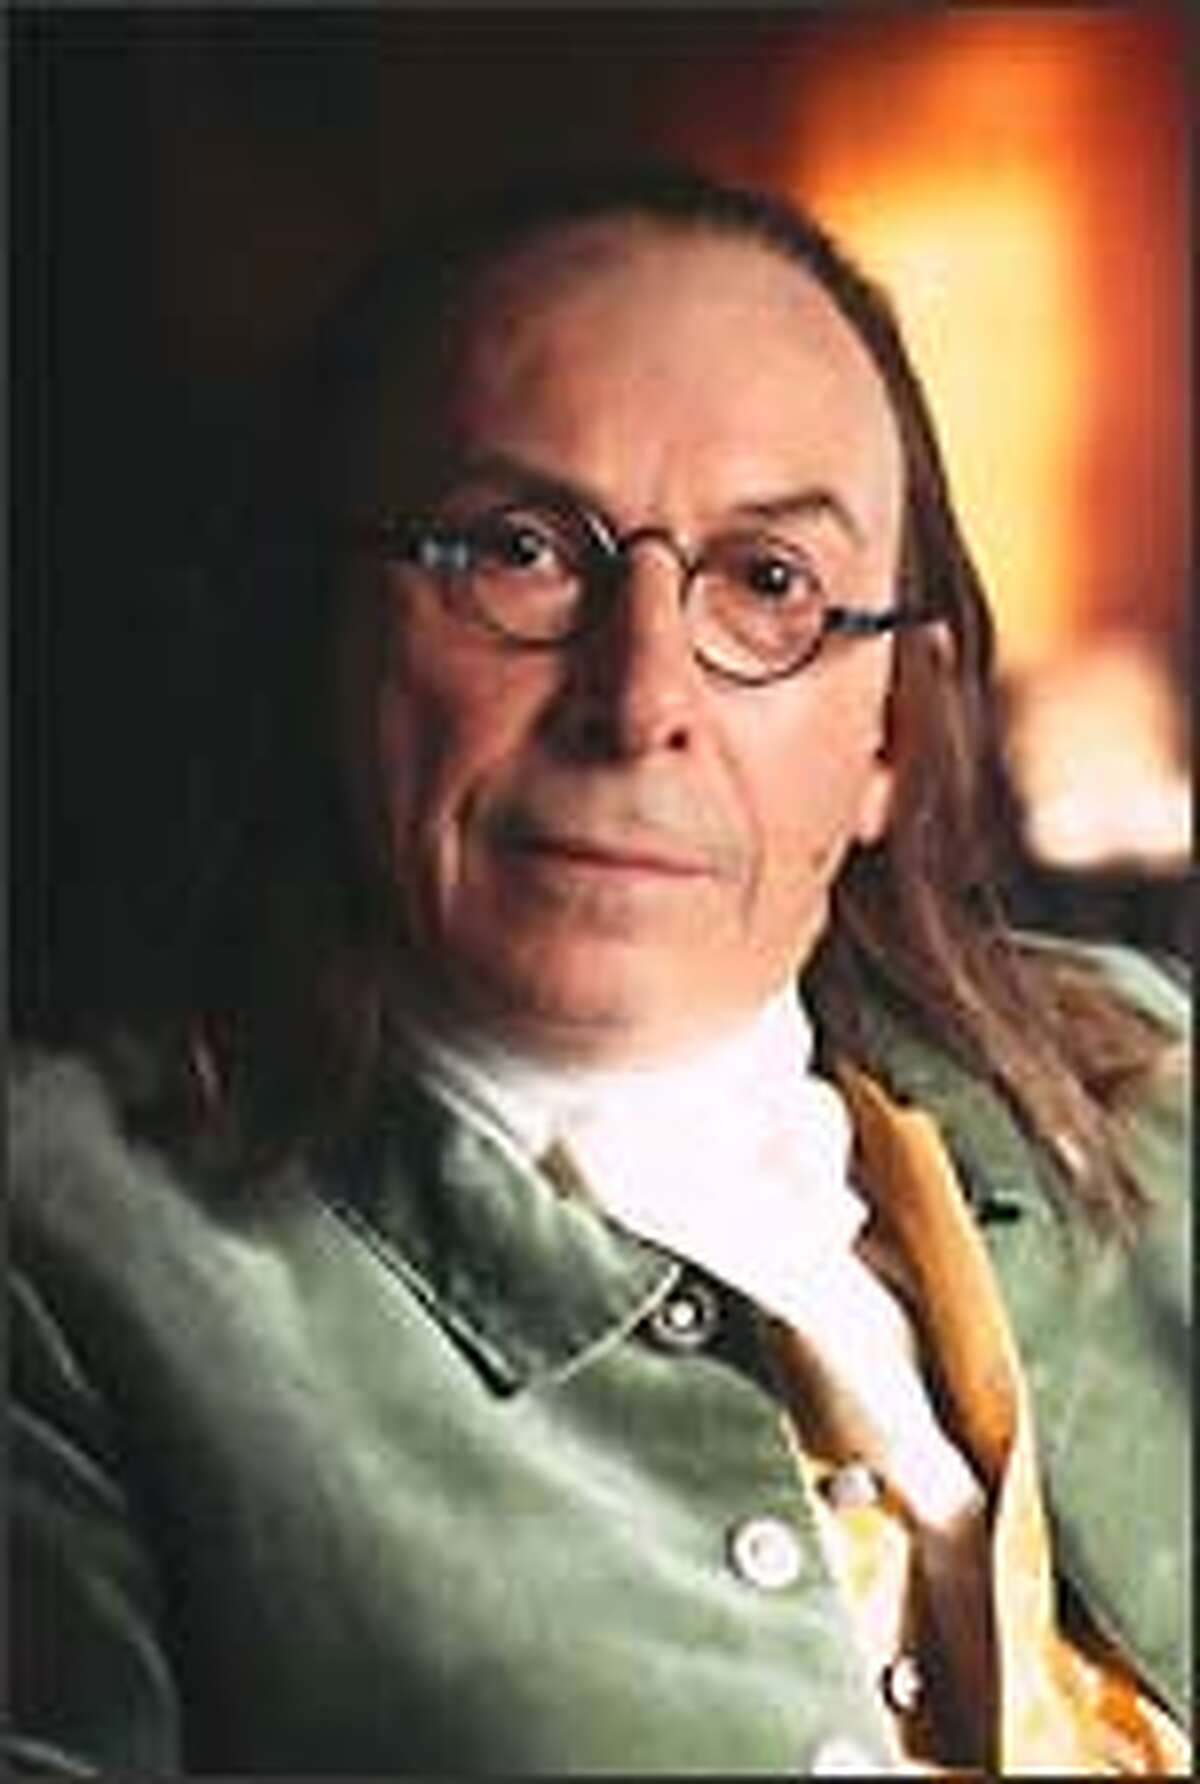 Tony Award winner Richard Easton portrays Benjamin Franklin in the PBS series.